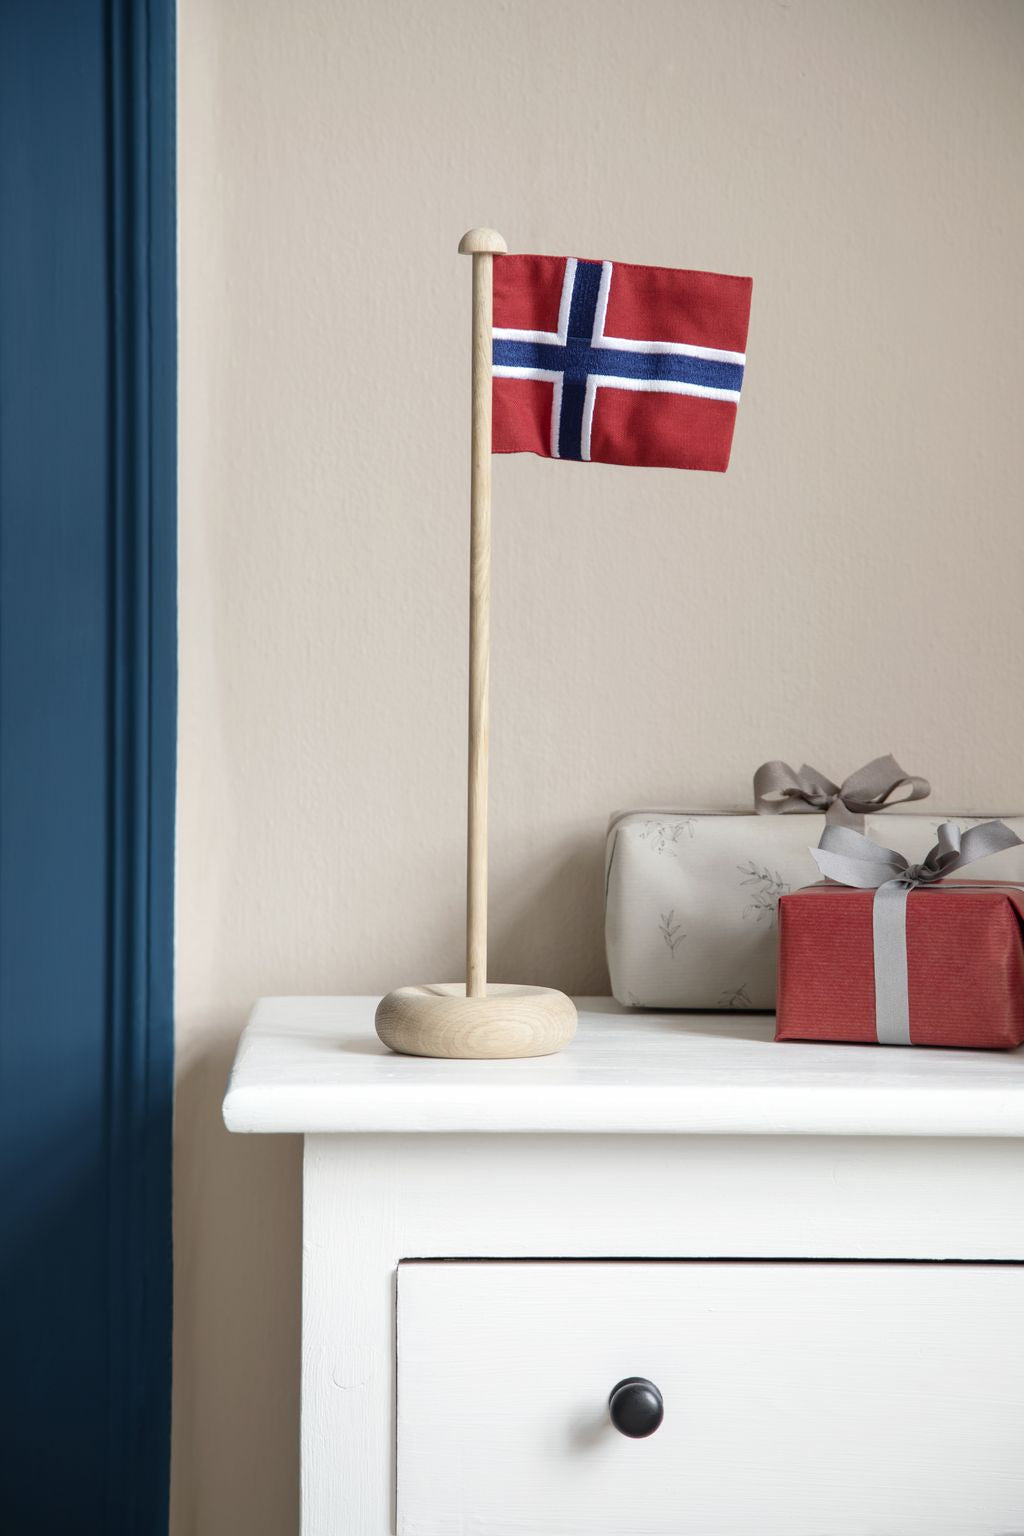 Novoform Design Tabelle Flagge, Norwegen